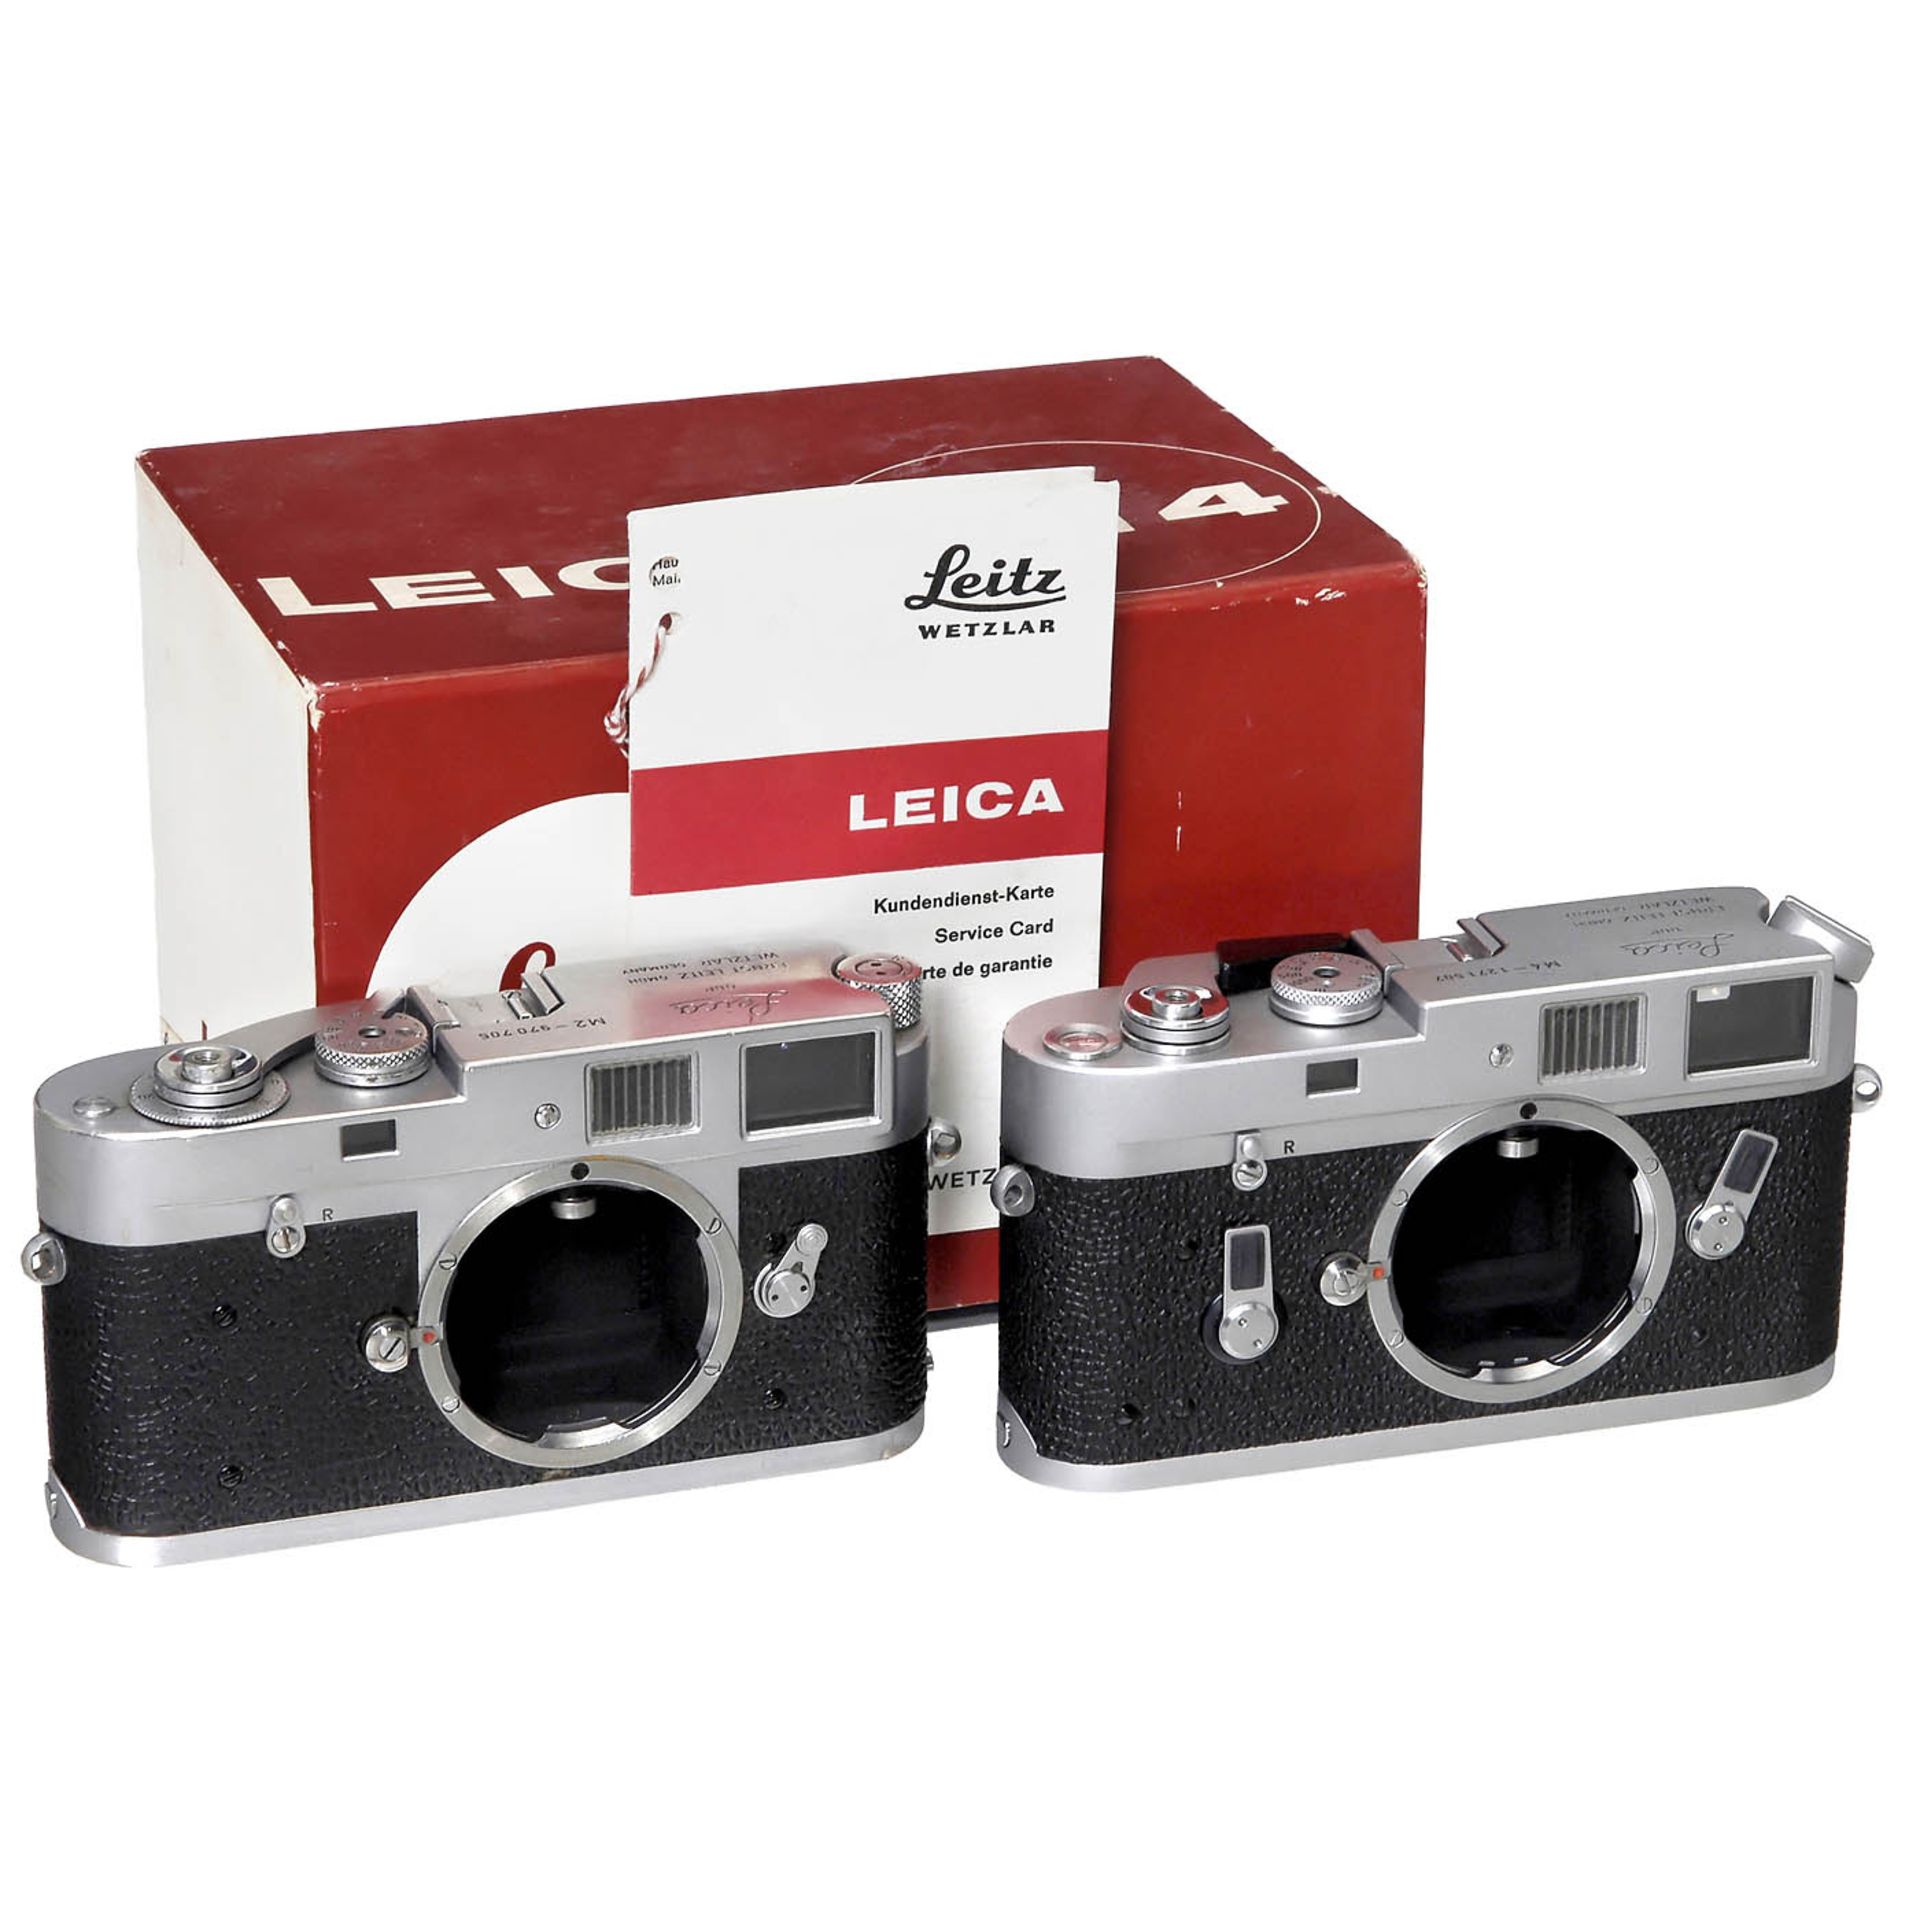 Leica M2 und Leica M4 im Ruhestand